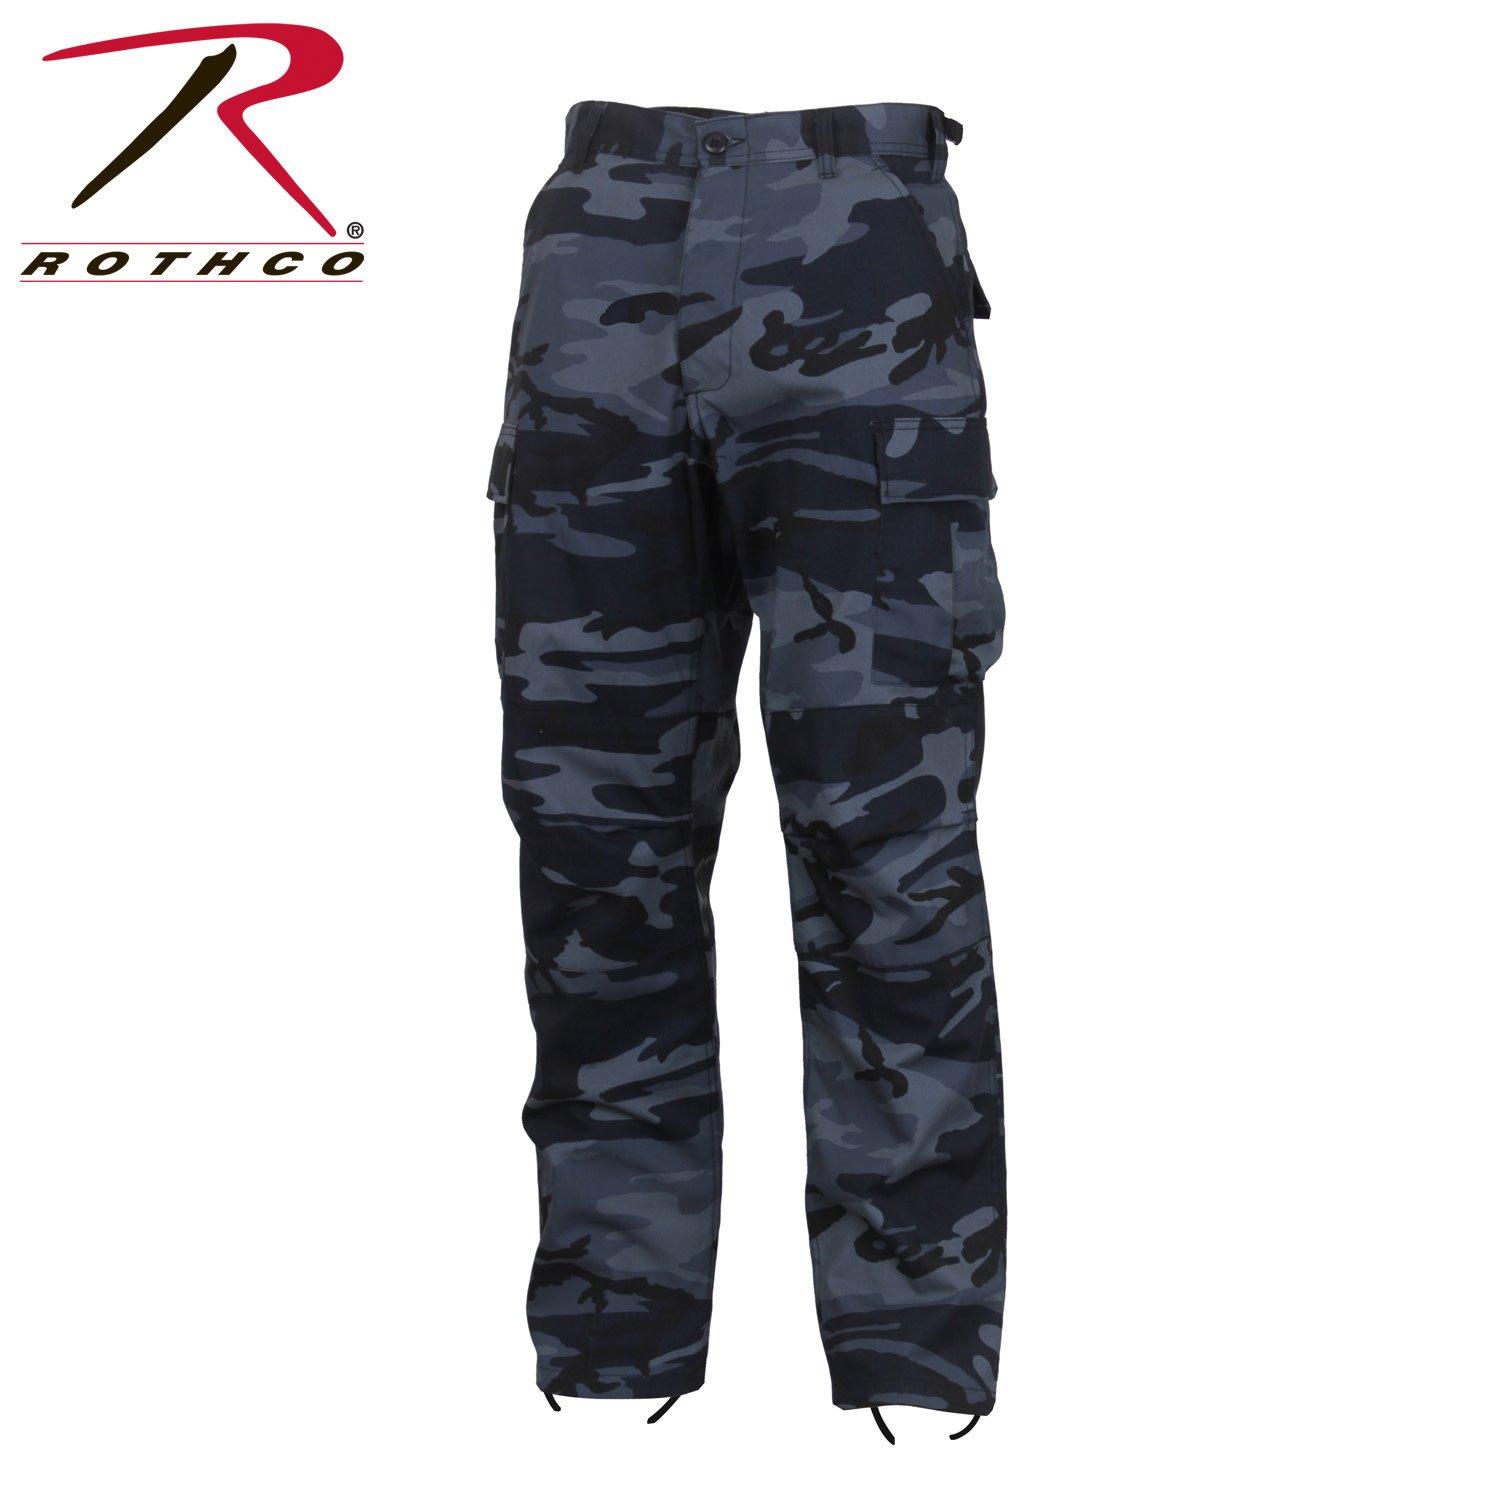 https://cdn.shoplightspeed.com/shops/616834/files/15992965/rothco-navy-blue-camo-military-style-pants.jpg